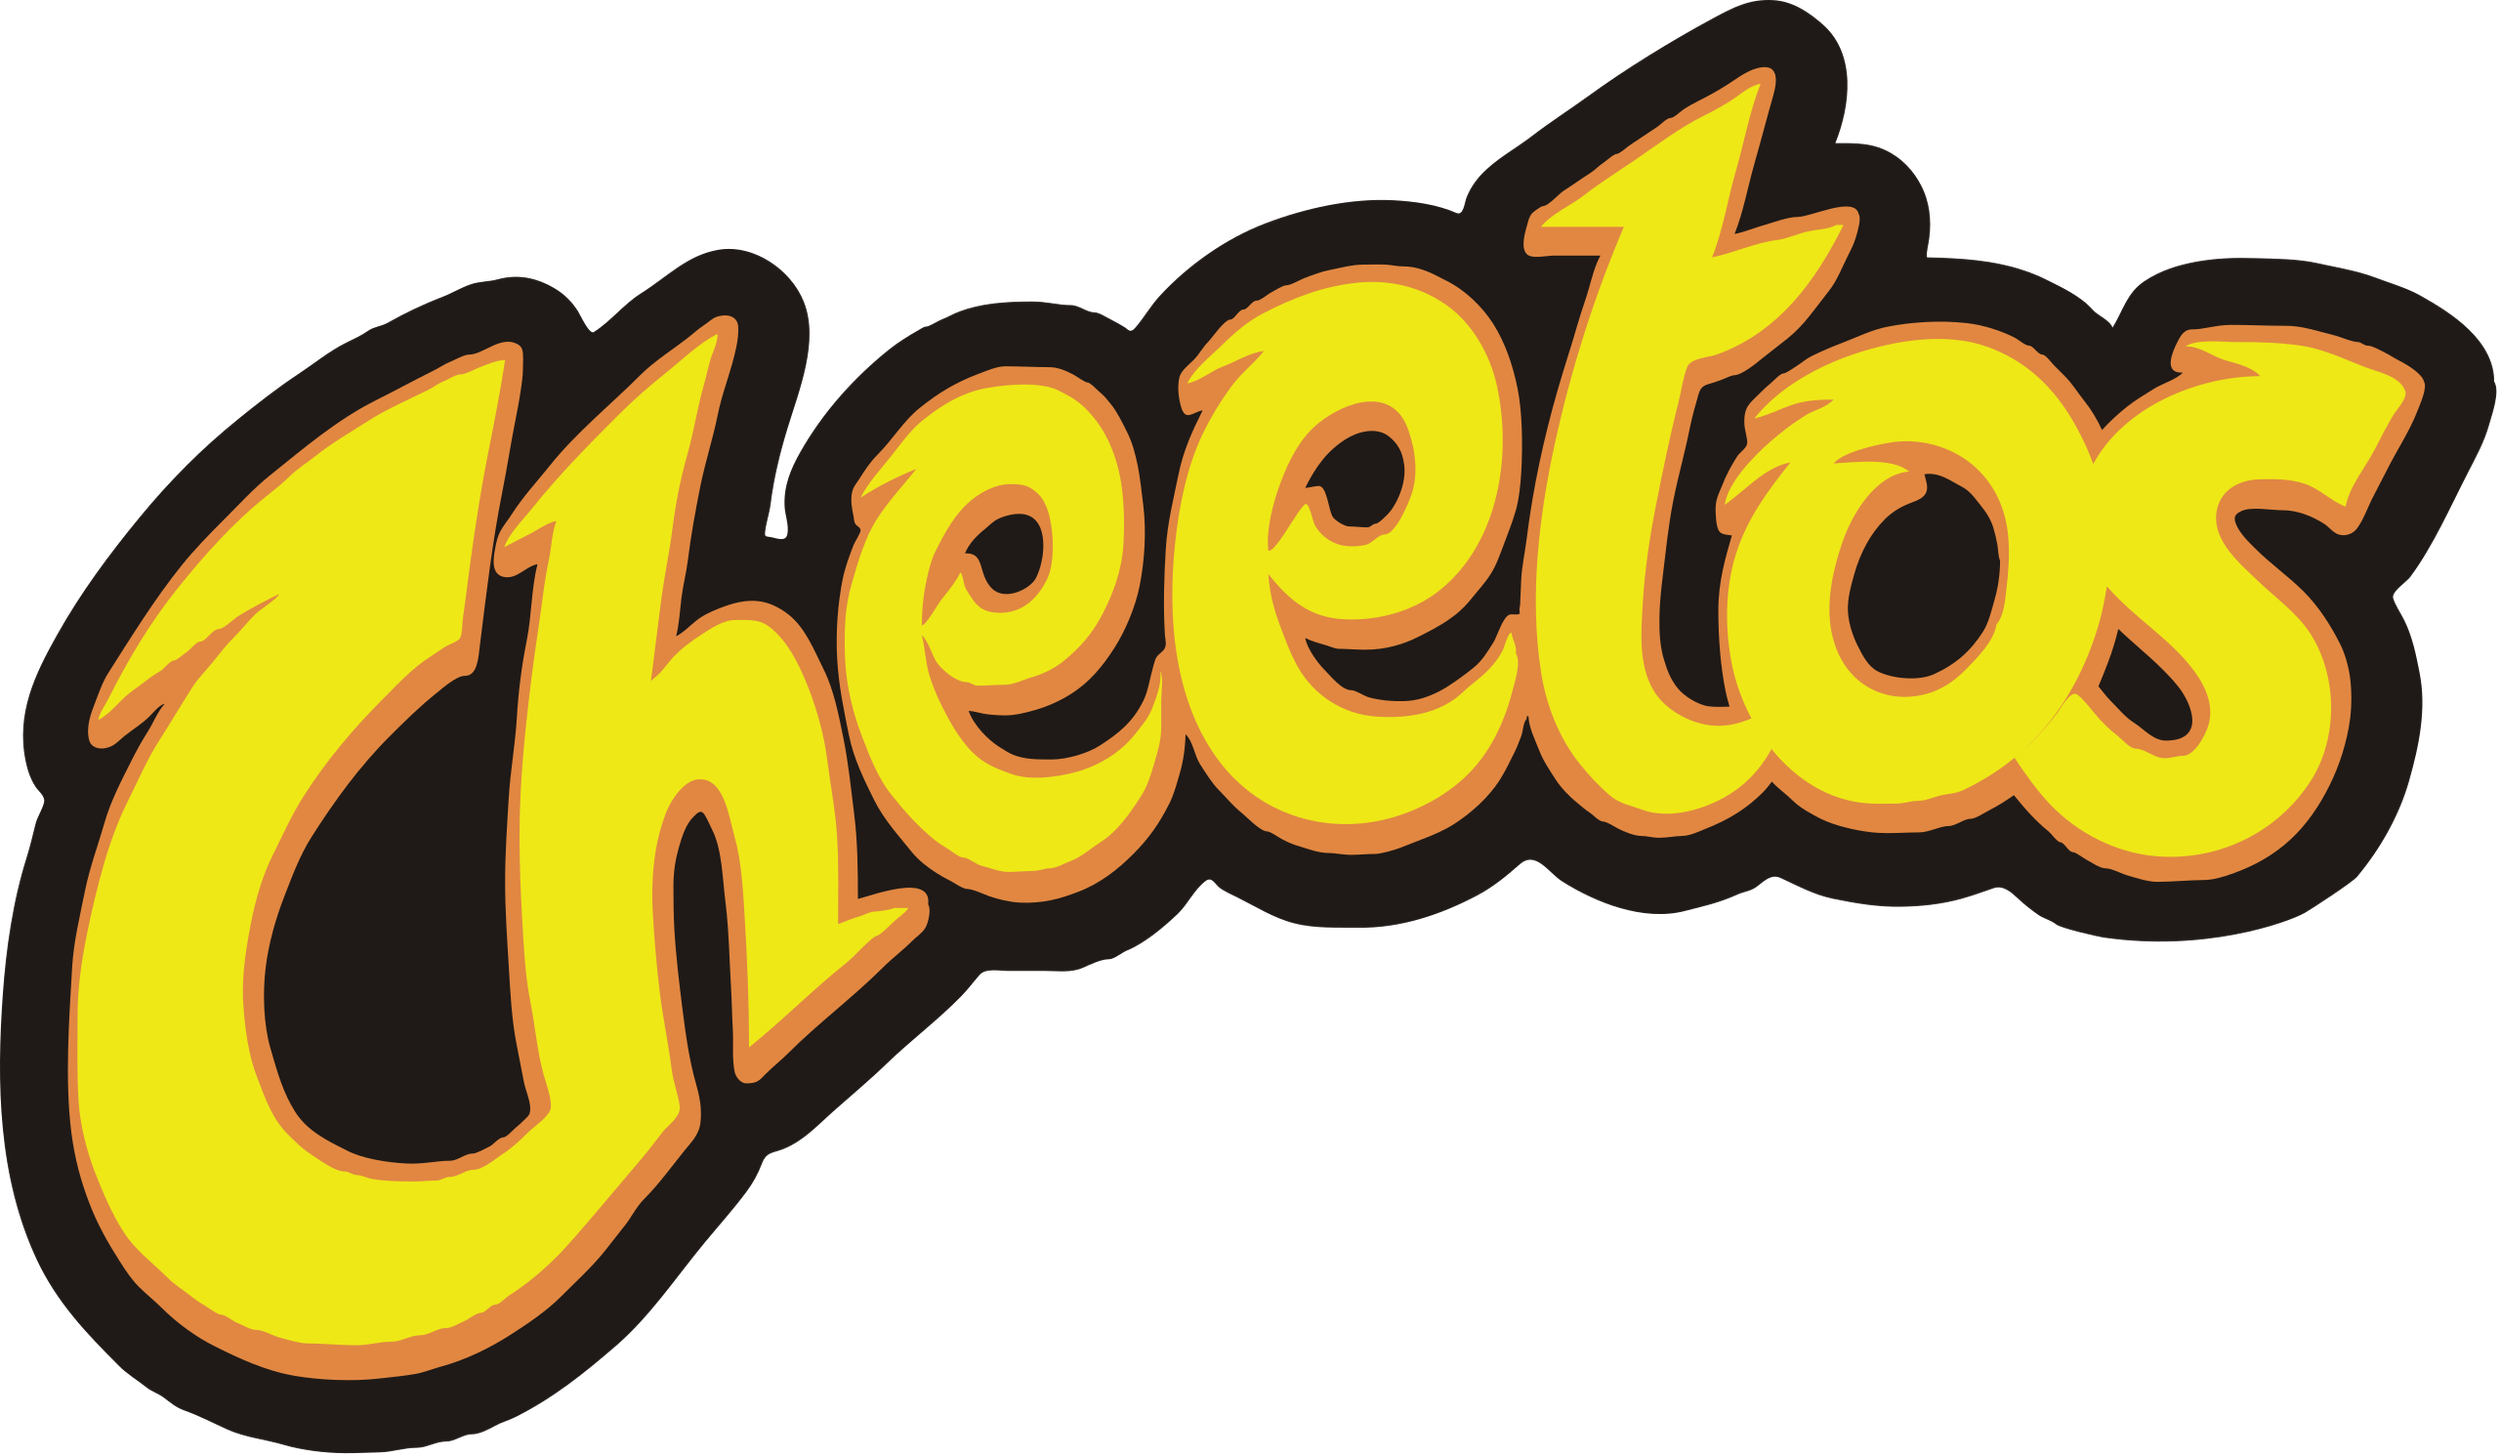 Cheetos_logo.png